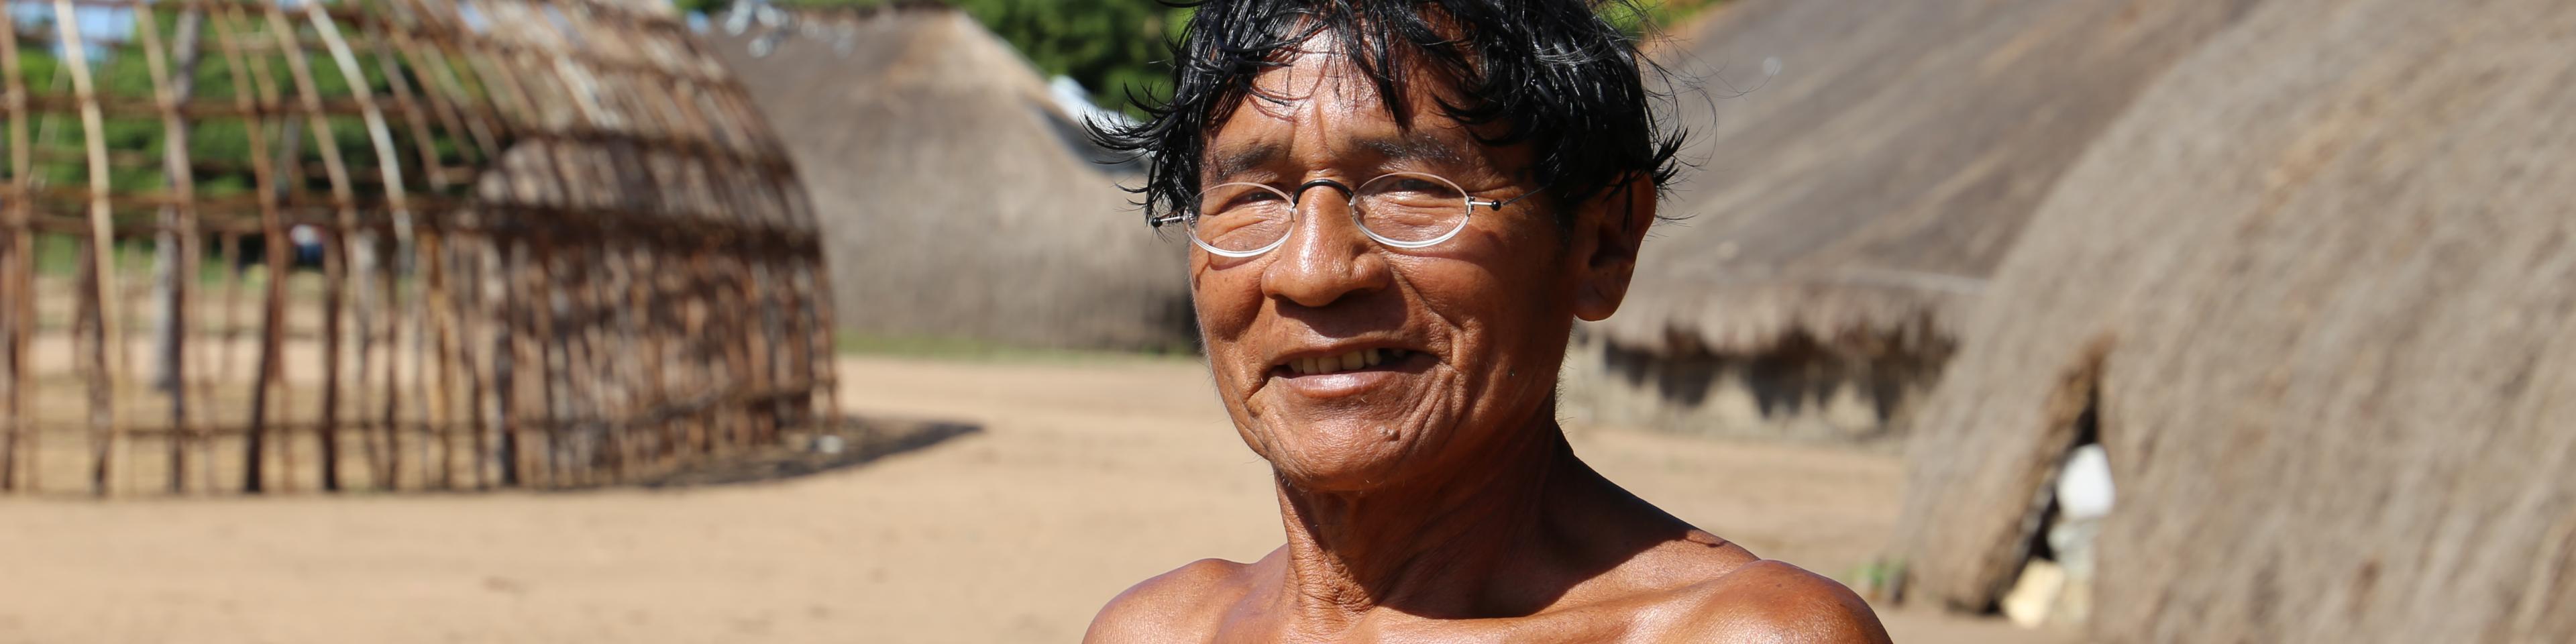 Indigener der Xingú